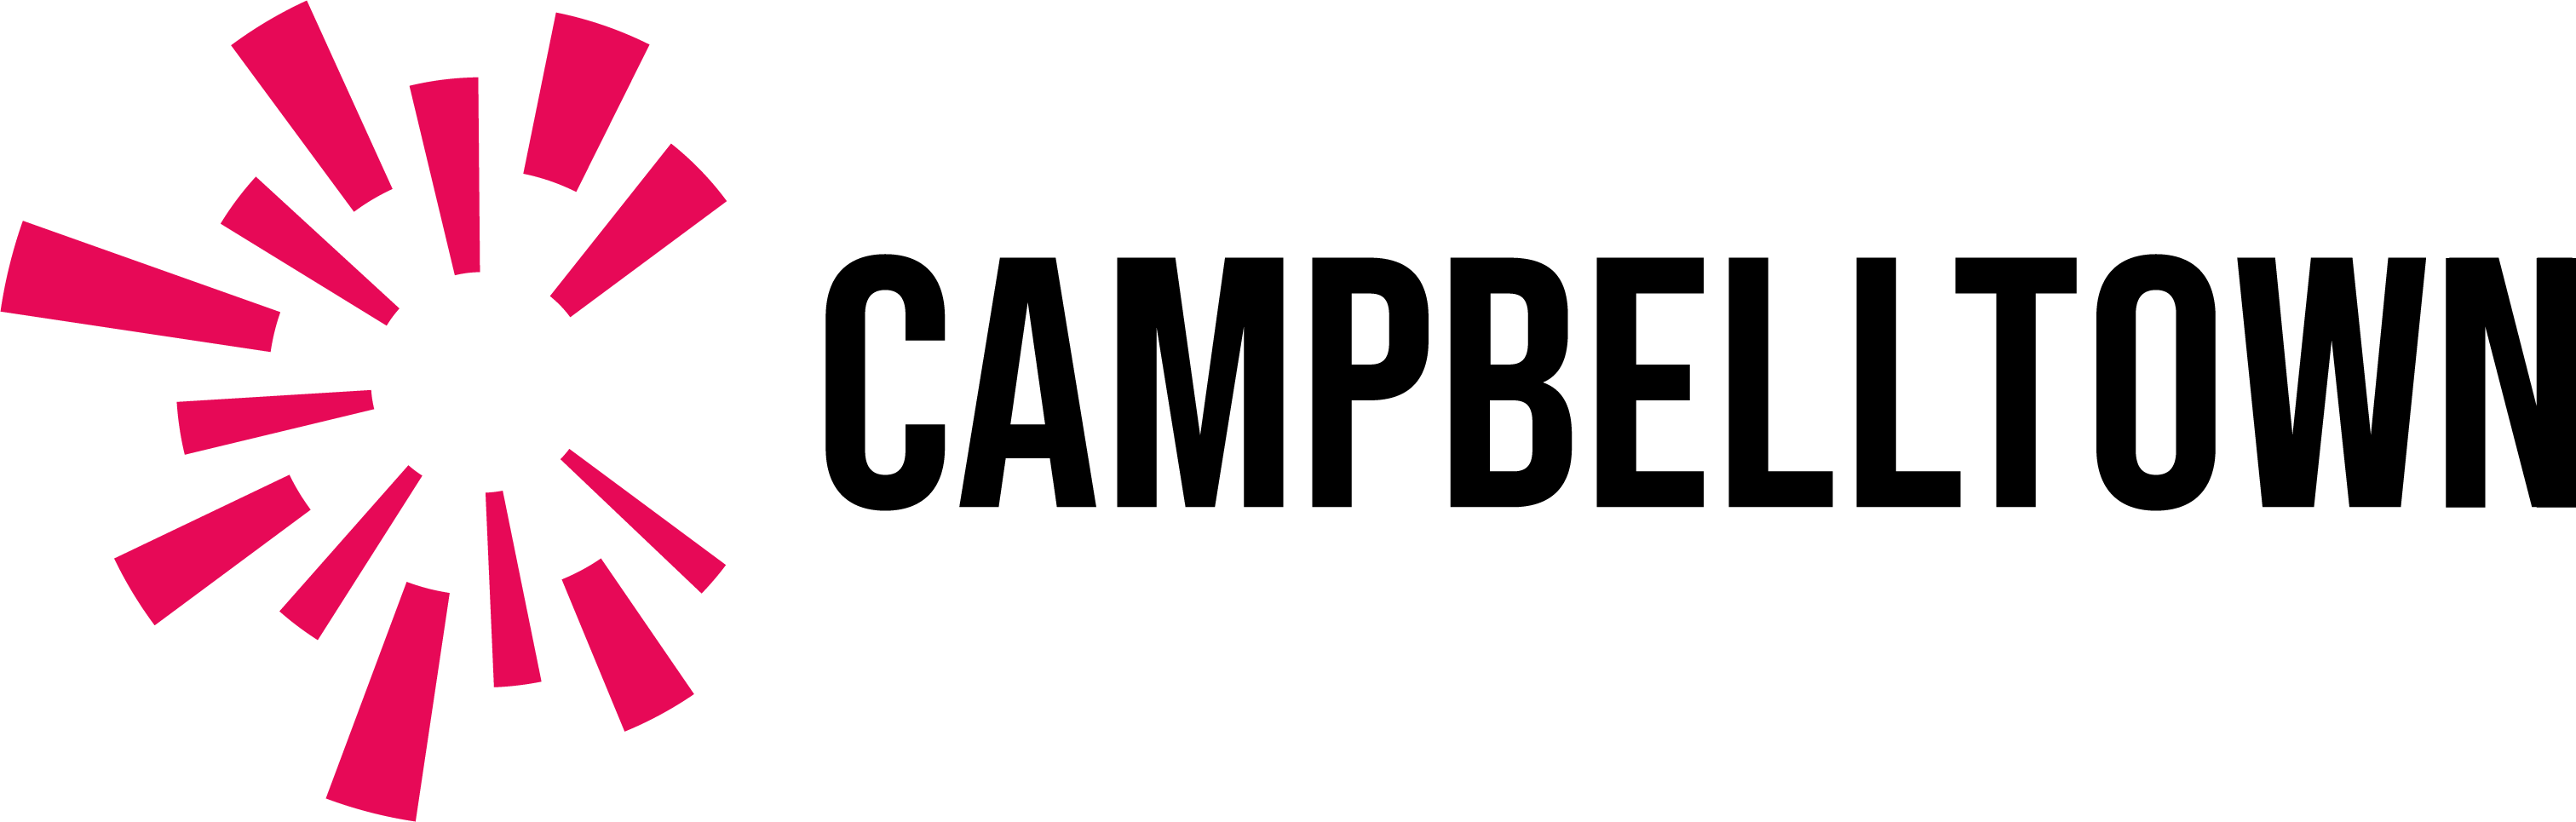 campebelltown logo png trans